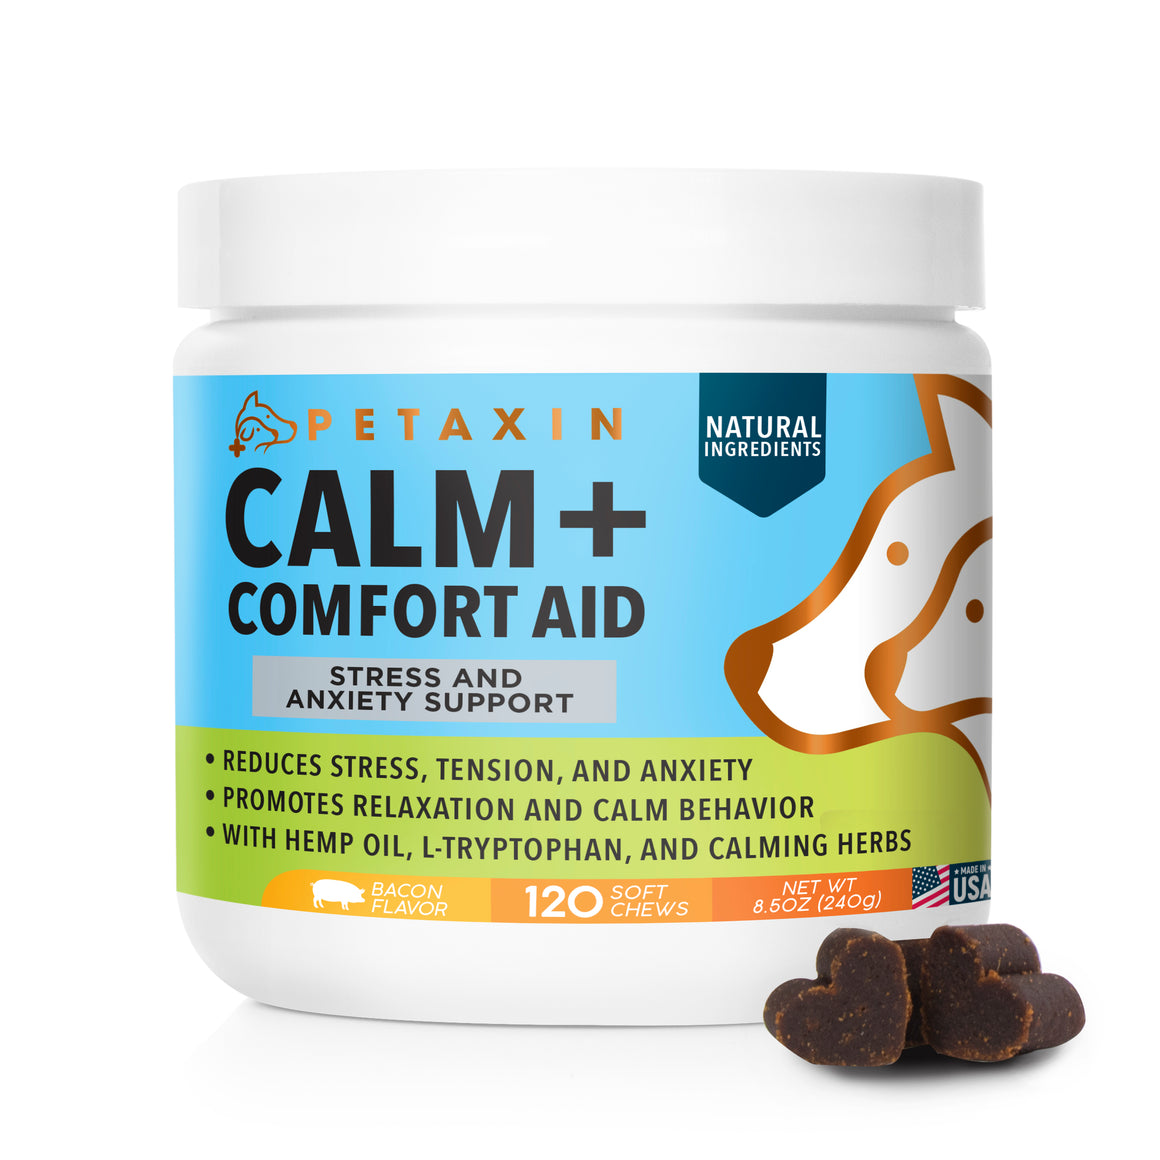 Petaxin Calm + Comfort Aid